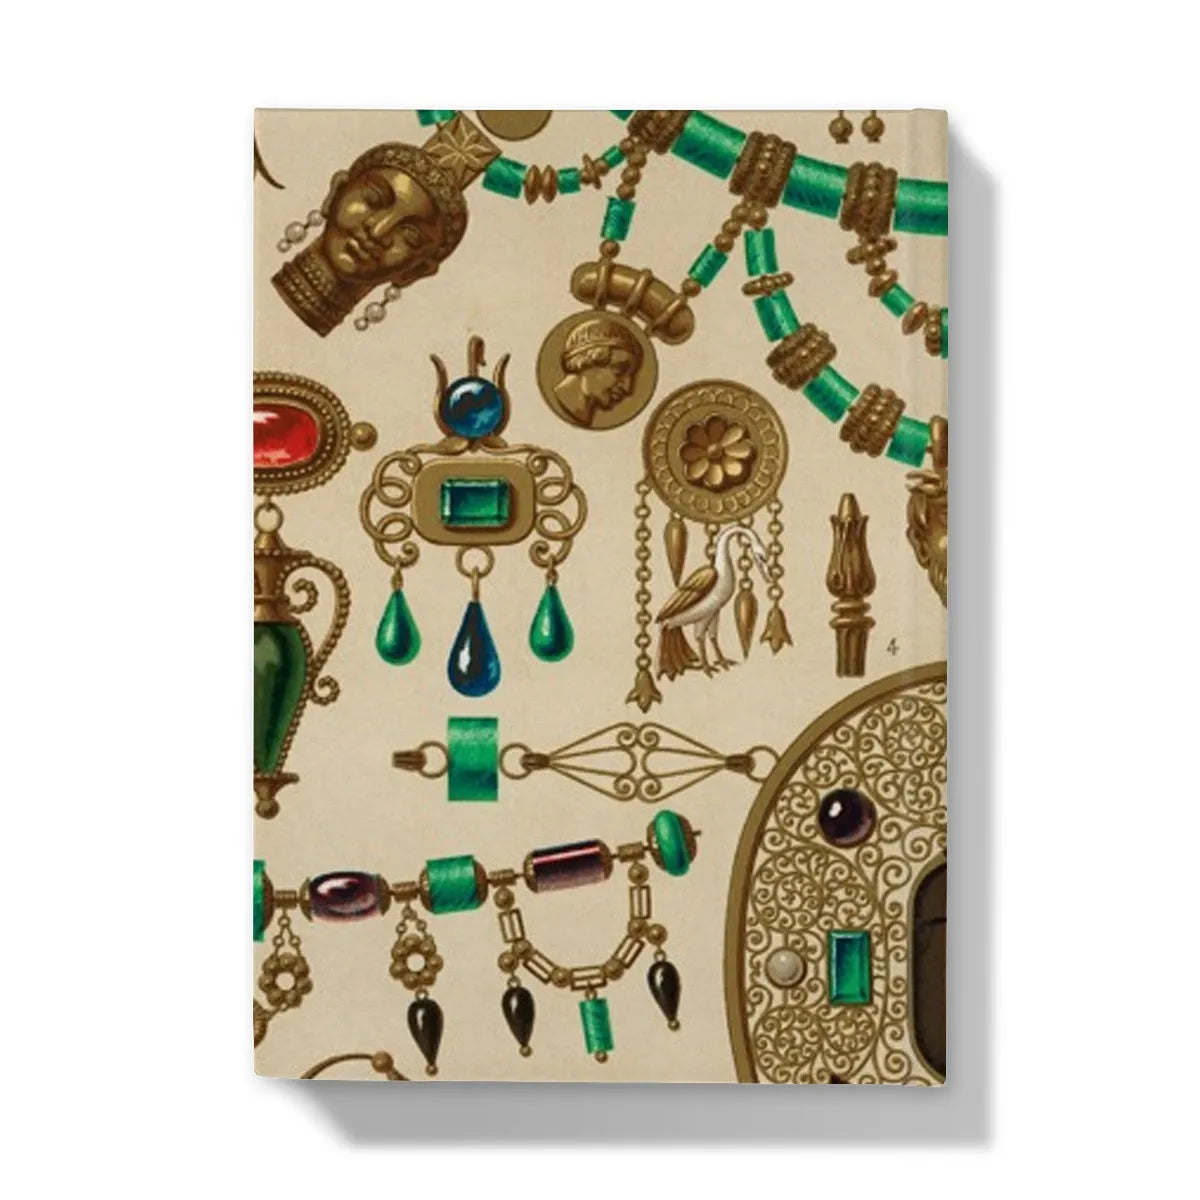 Etruscan Jewelry By Auguste Racinet Hardback Journal - Notebooks & Notepads - Aesthetic Art